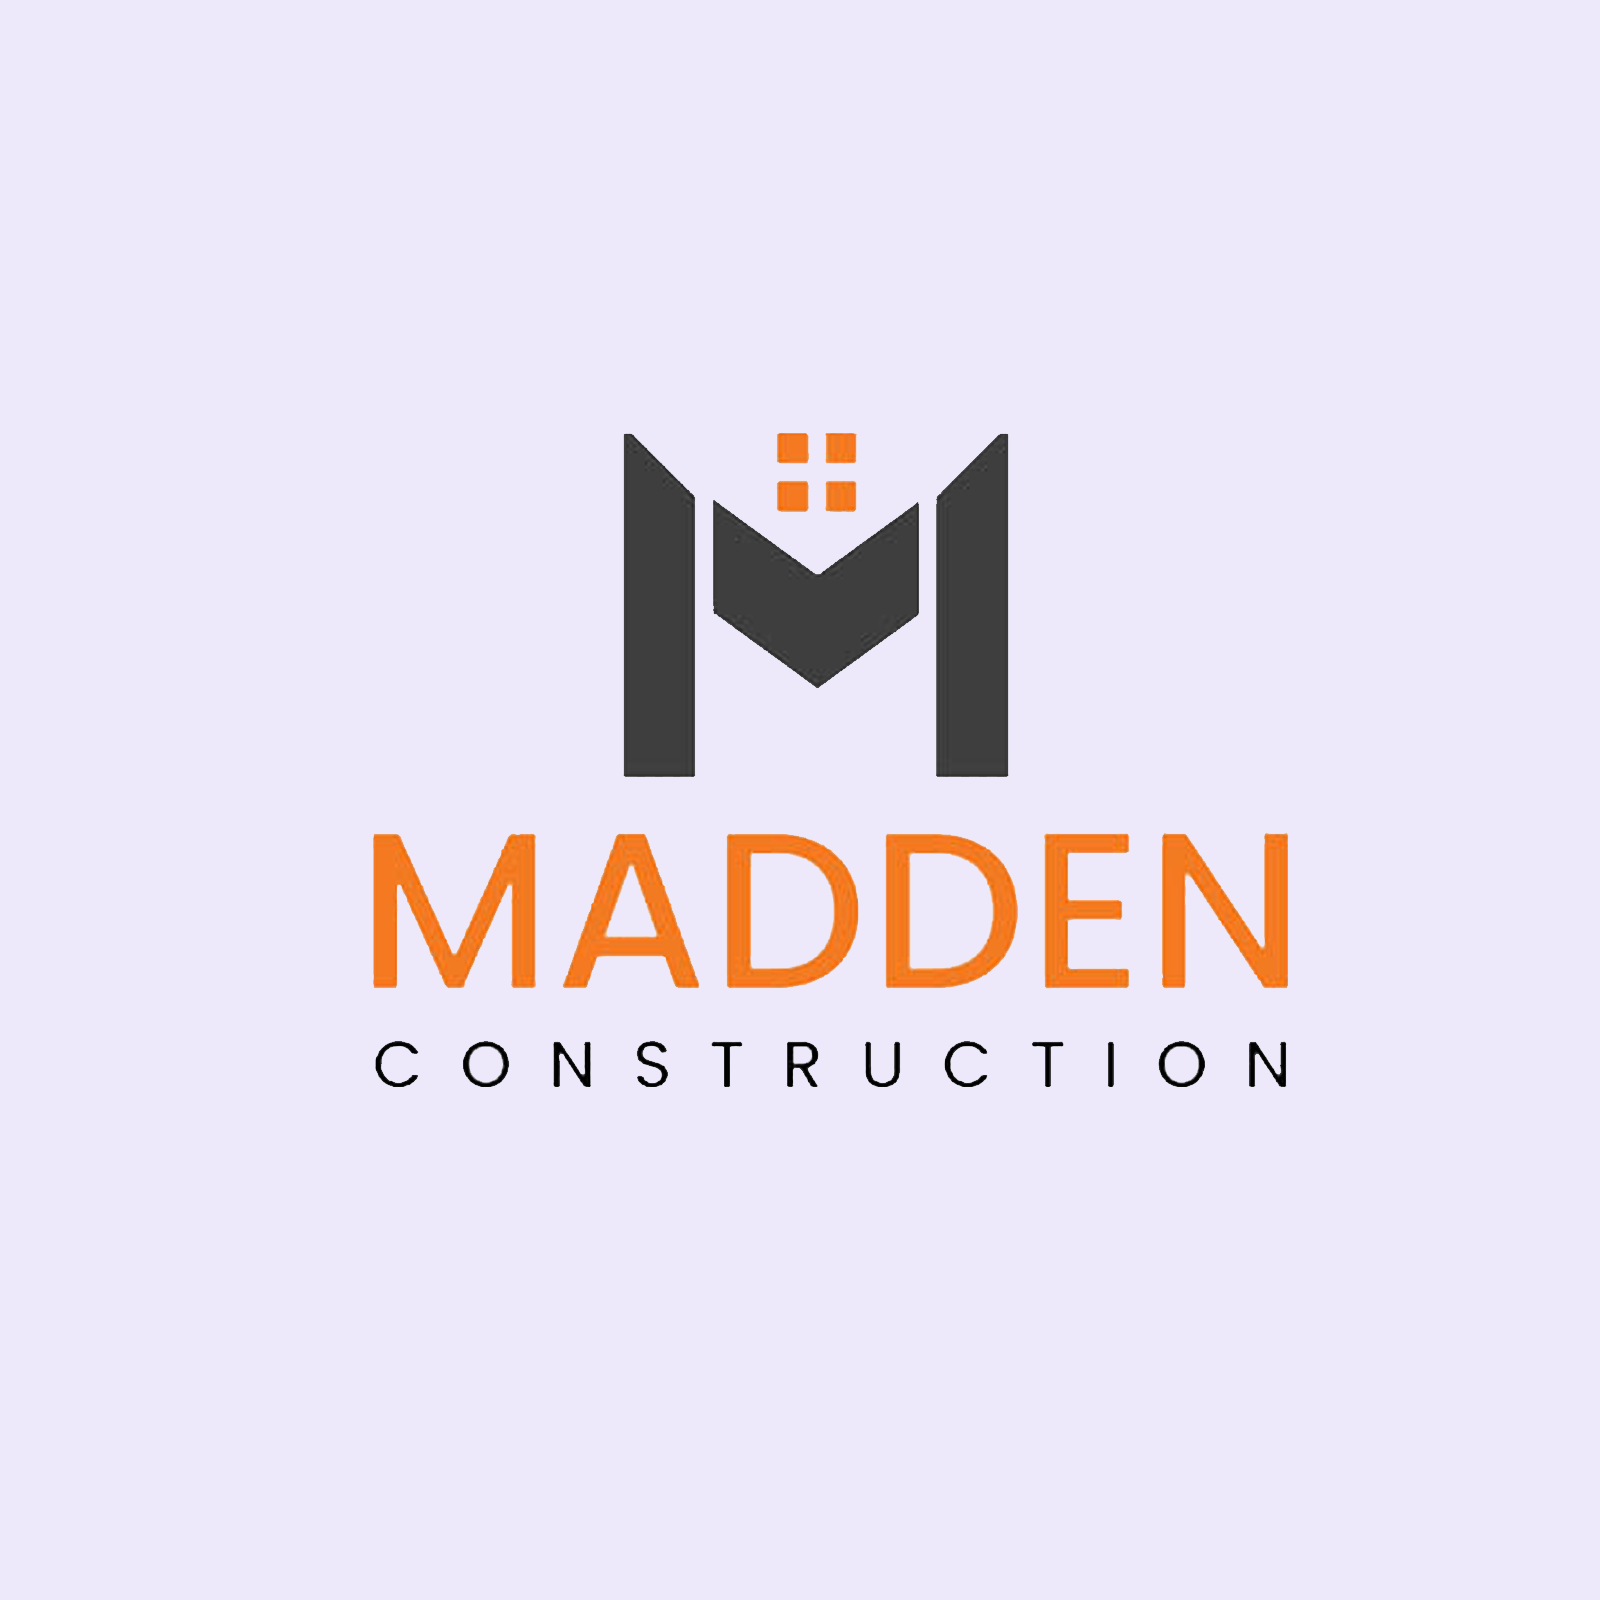 Construction Company logo design services